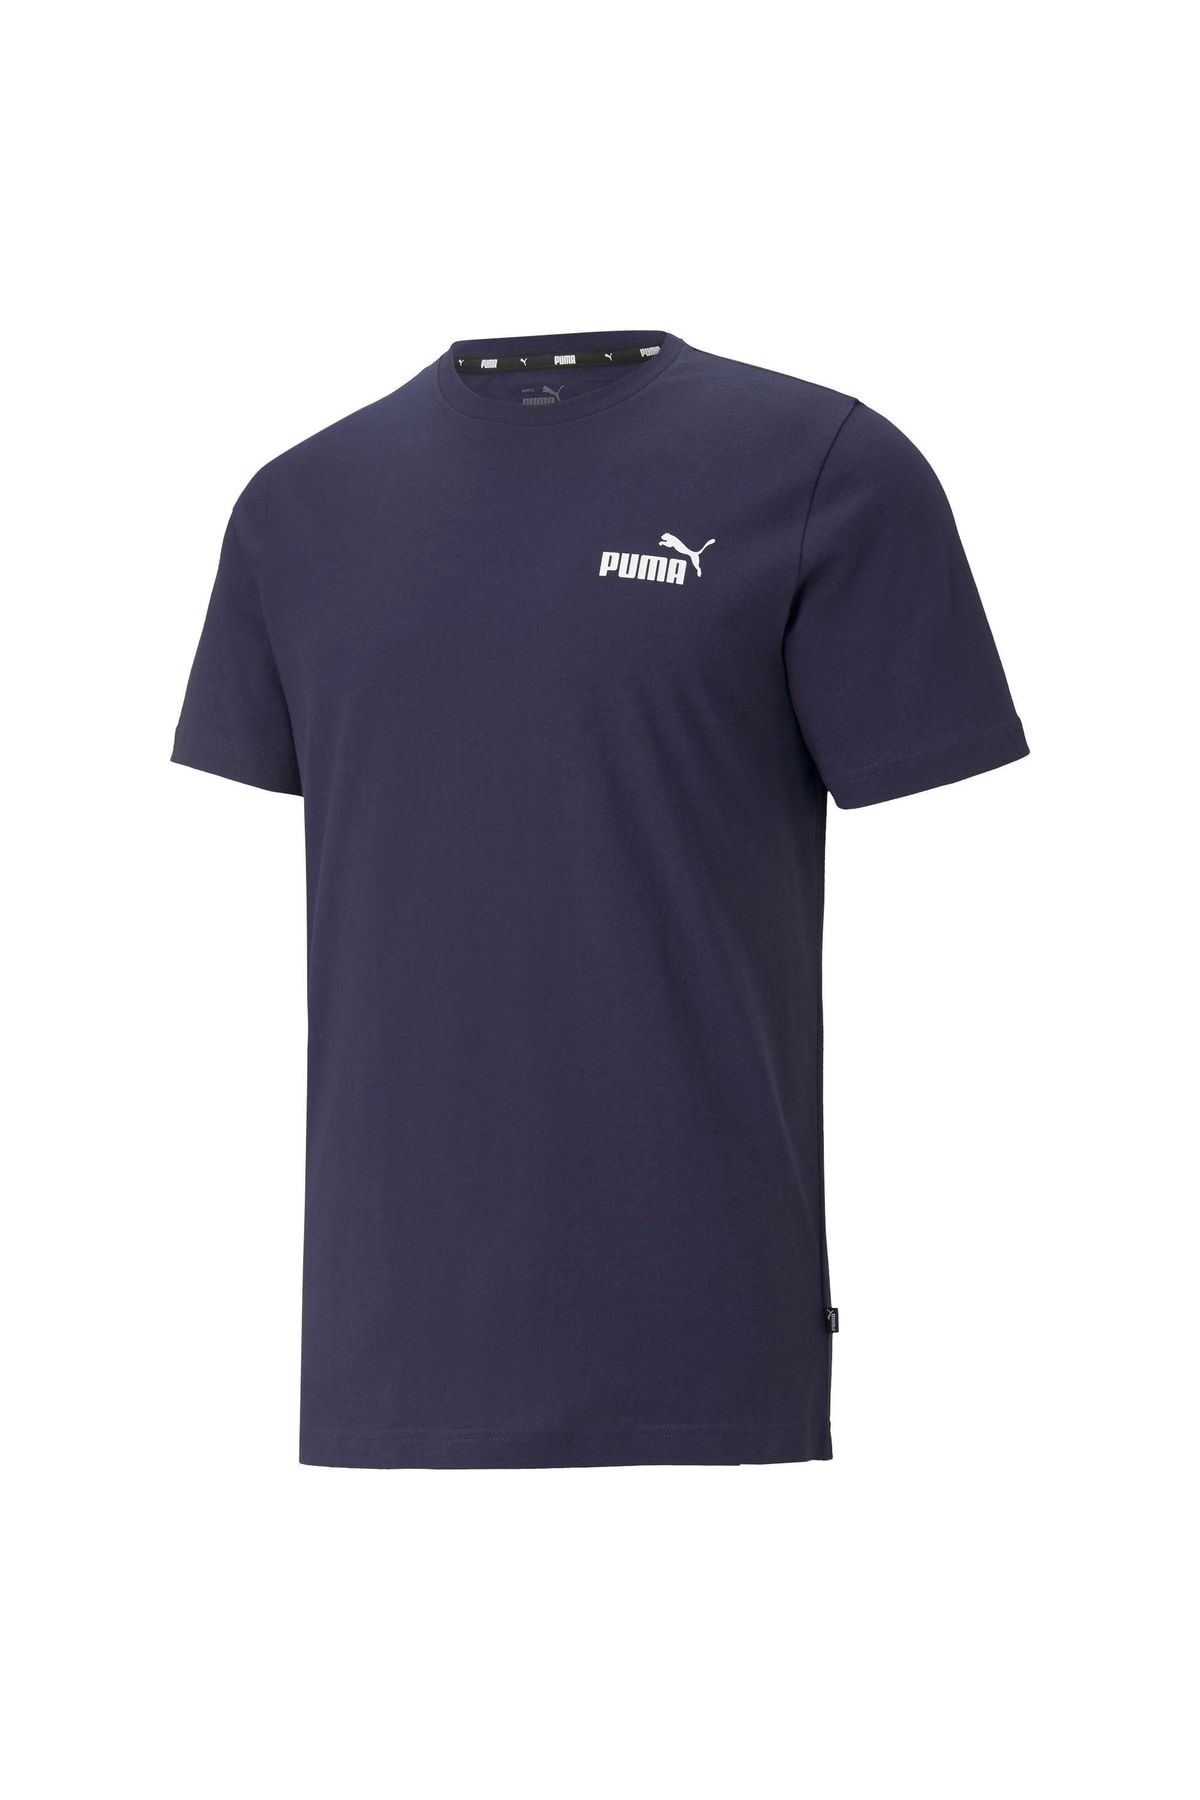 Puma - T-Shirt Logo ESS Blue Trendyol Men\'s Tee - Navy Small